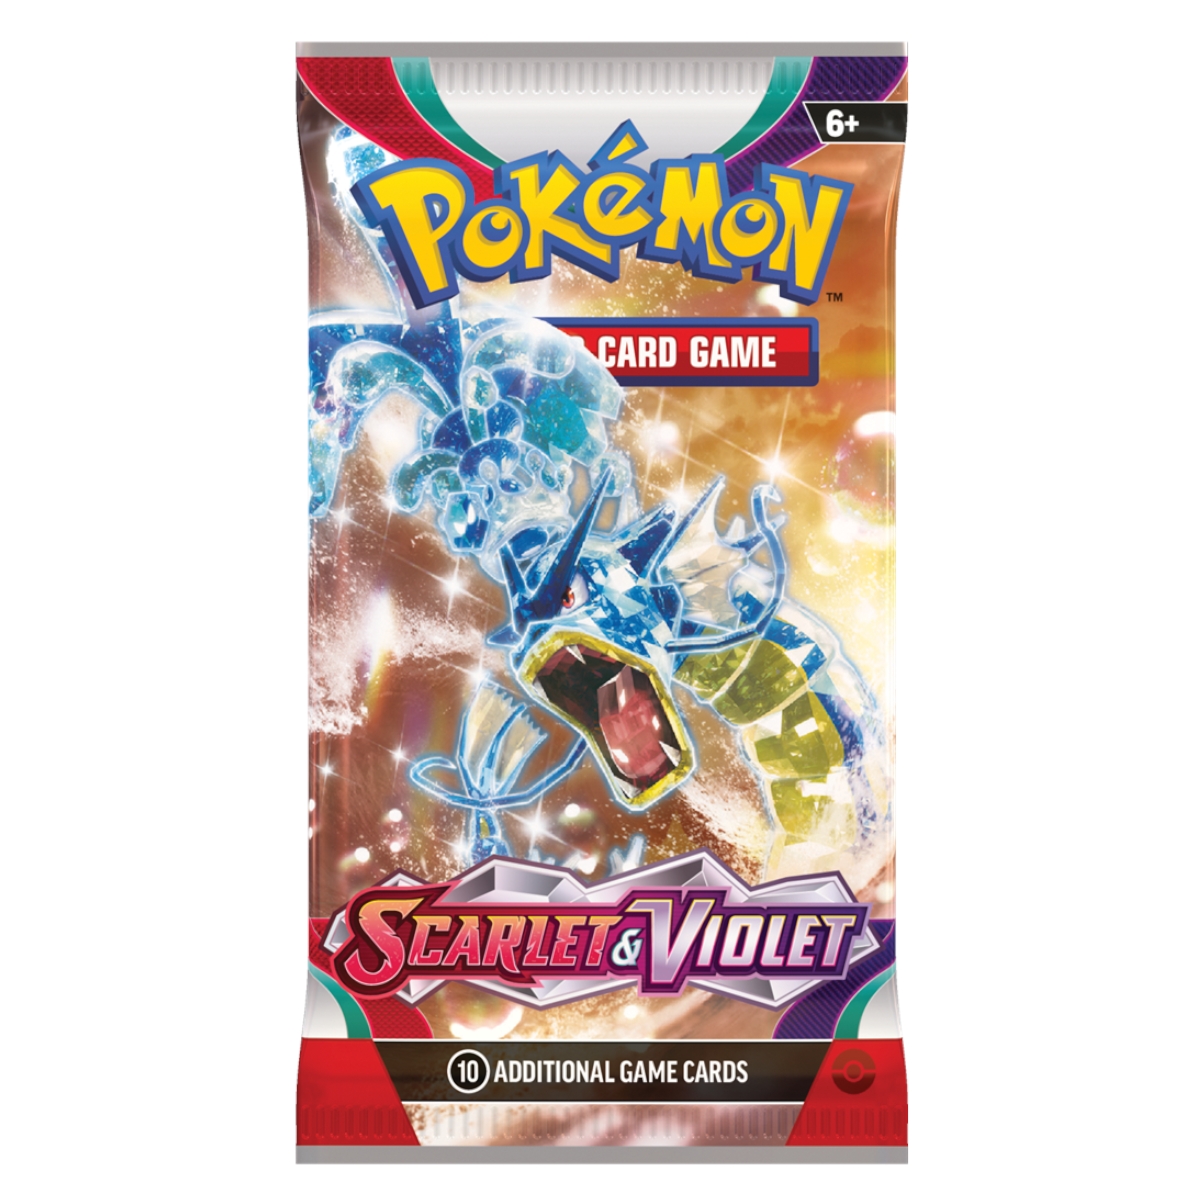 Pokémon - Scarlet & Violet Booster